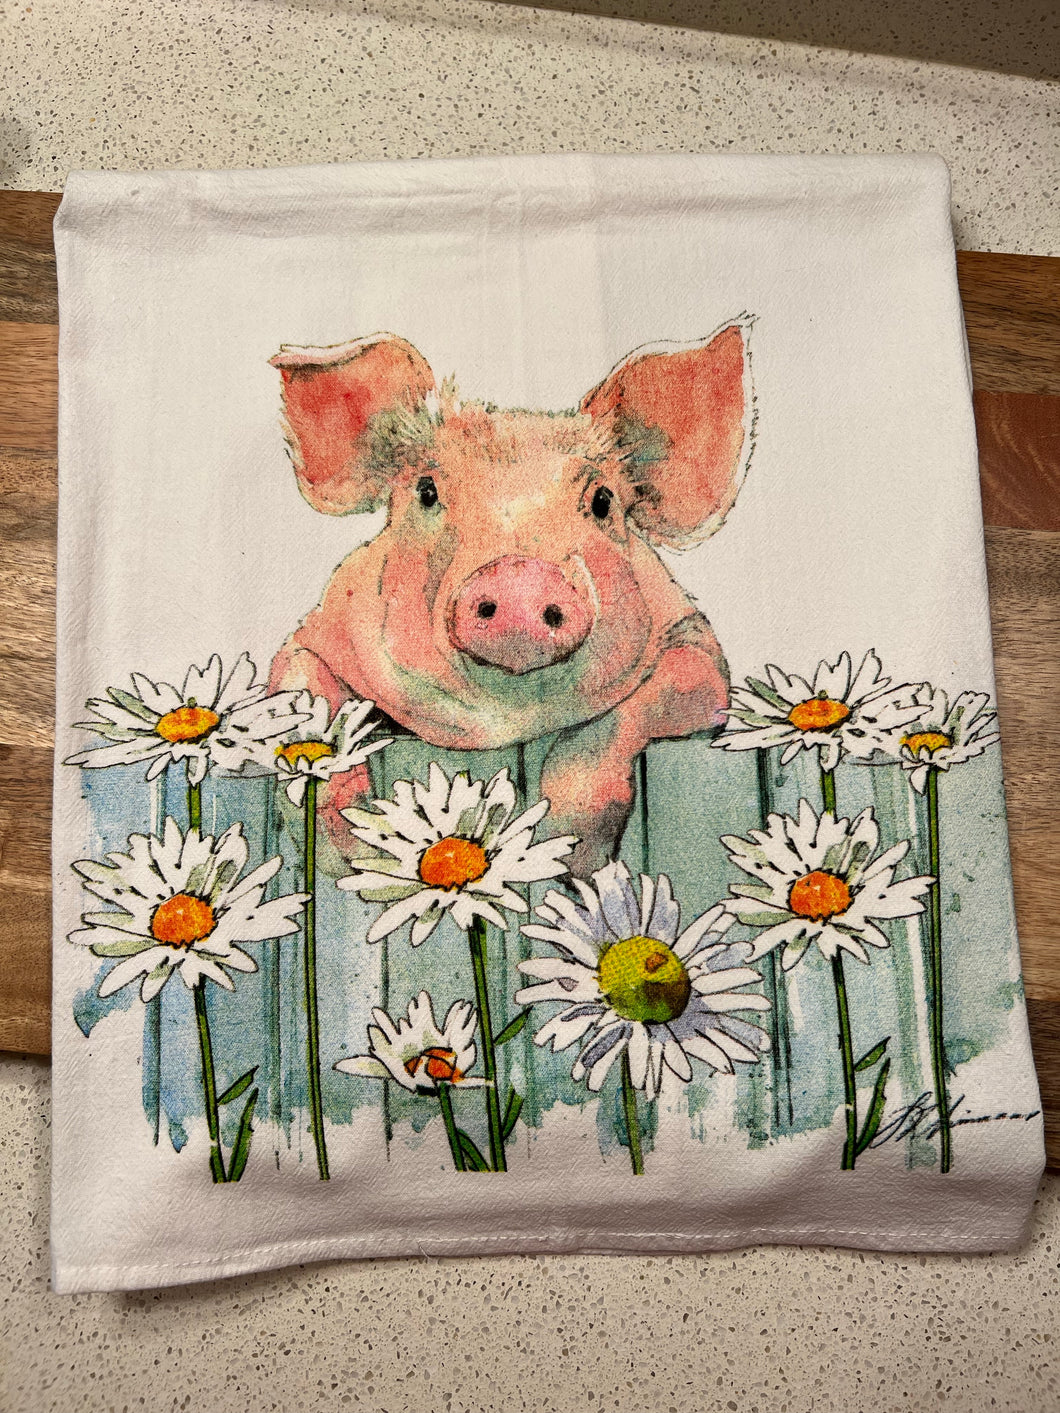 Flour Sack Decorative Dish Towel, Pig Lover Gift, Funny Tea Towels, Gettin'  Piggy With It, Farmhouse Tea Towel